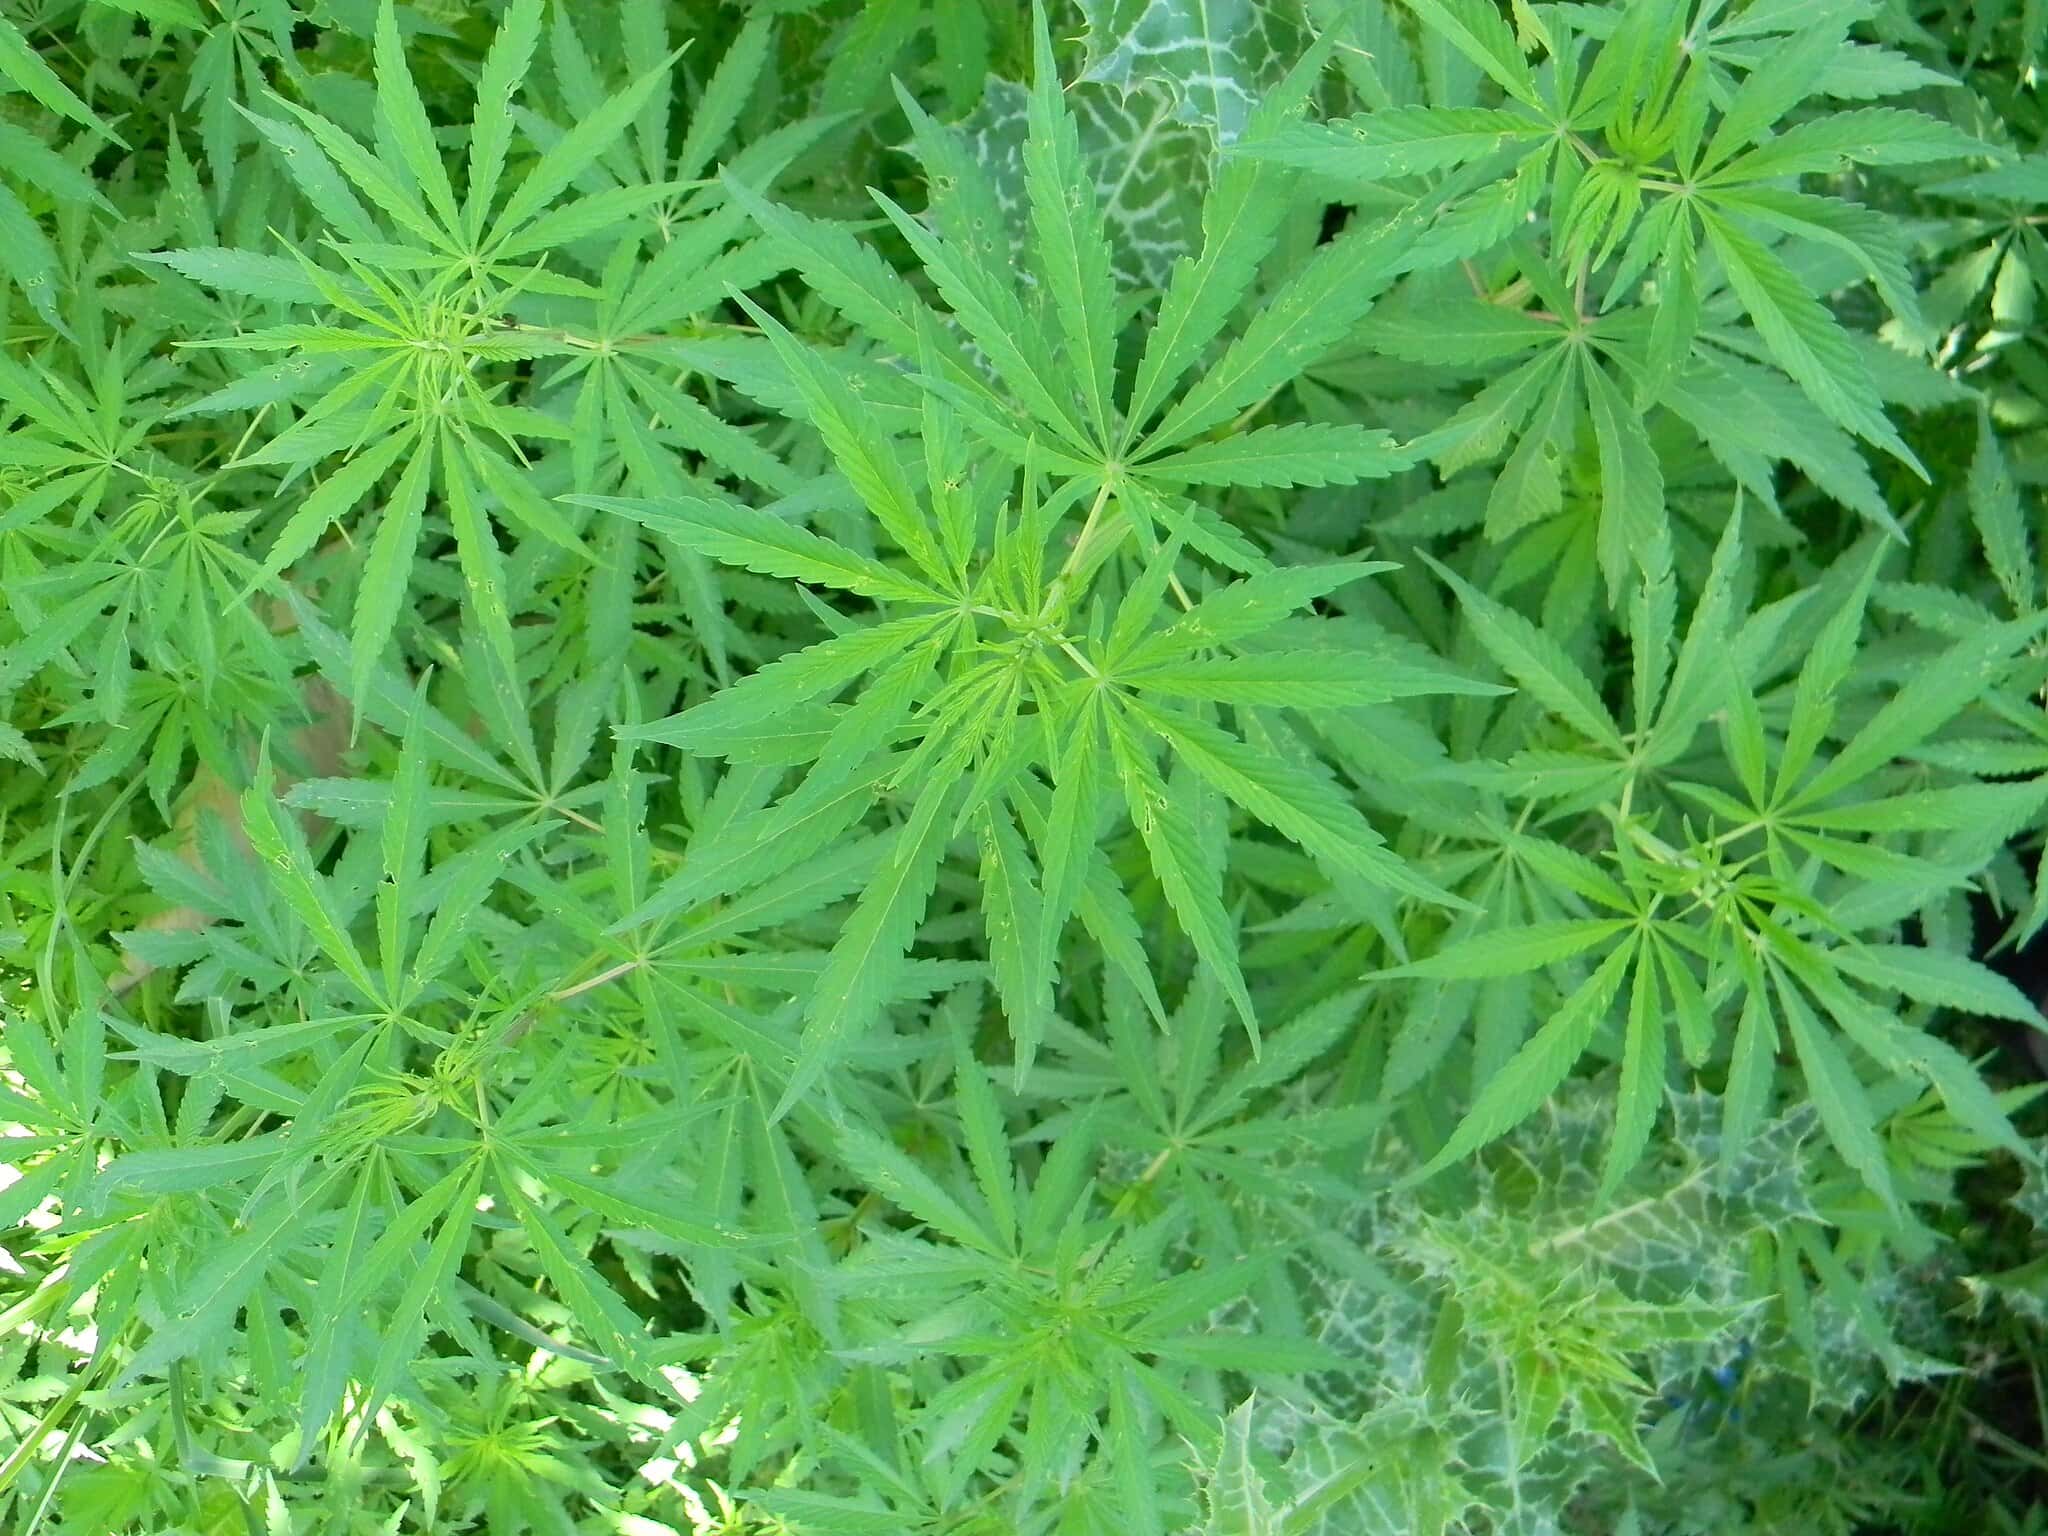 Up close view of a cannabis or marijuana plant